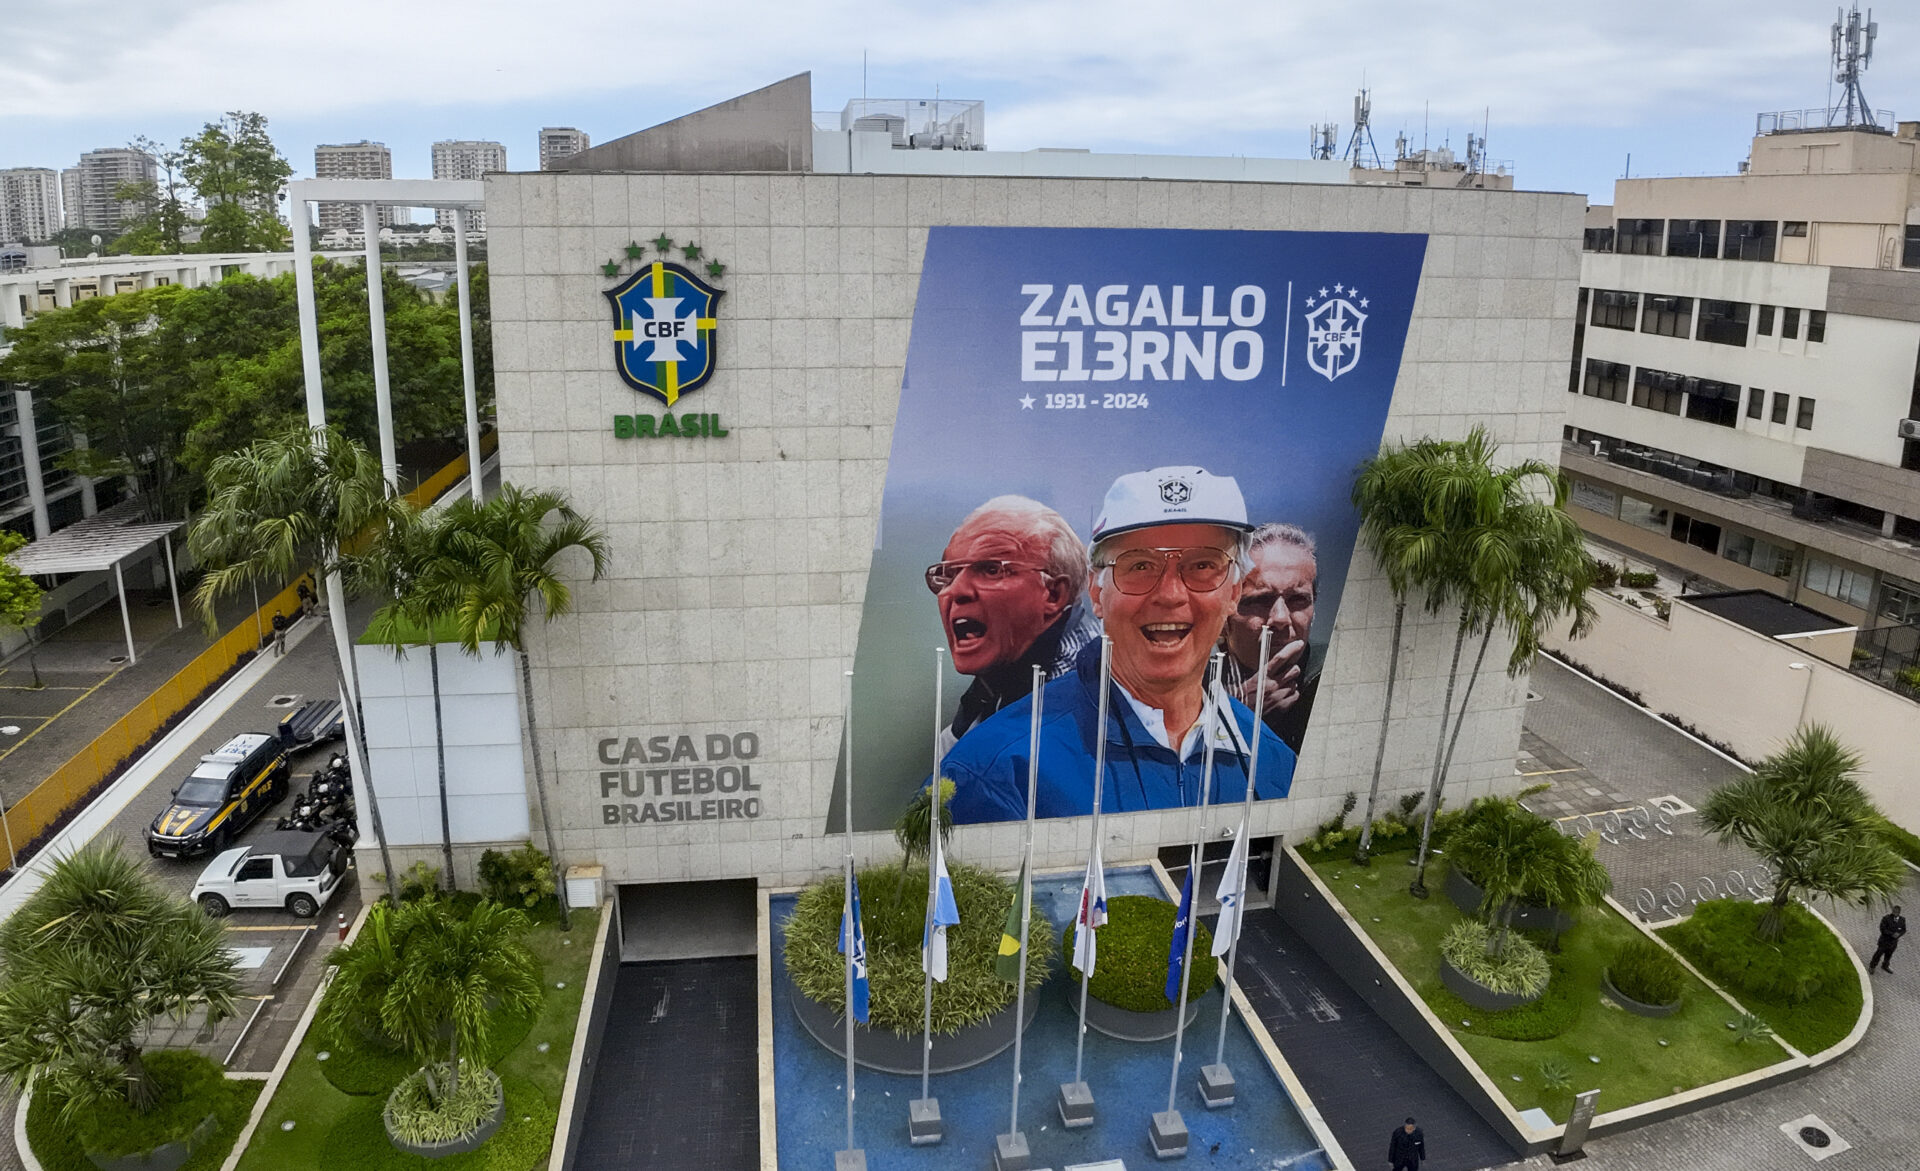 Velório de Zagallo na sede da CBF é marcado por visita de ex-atletas e técnicos